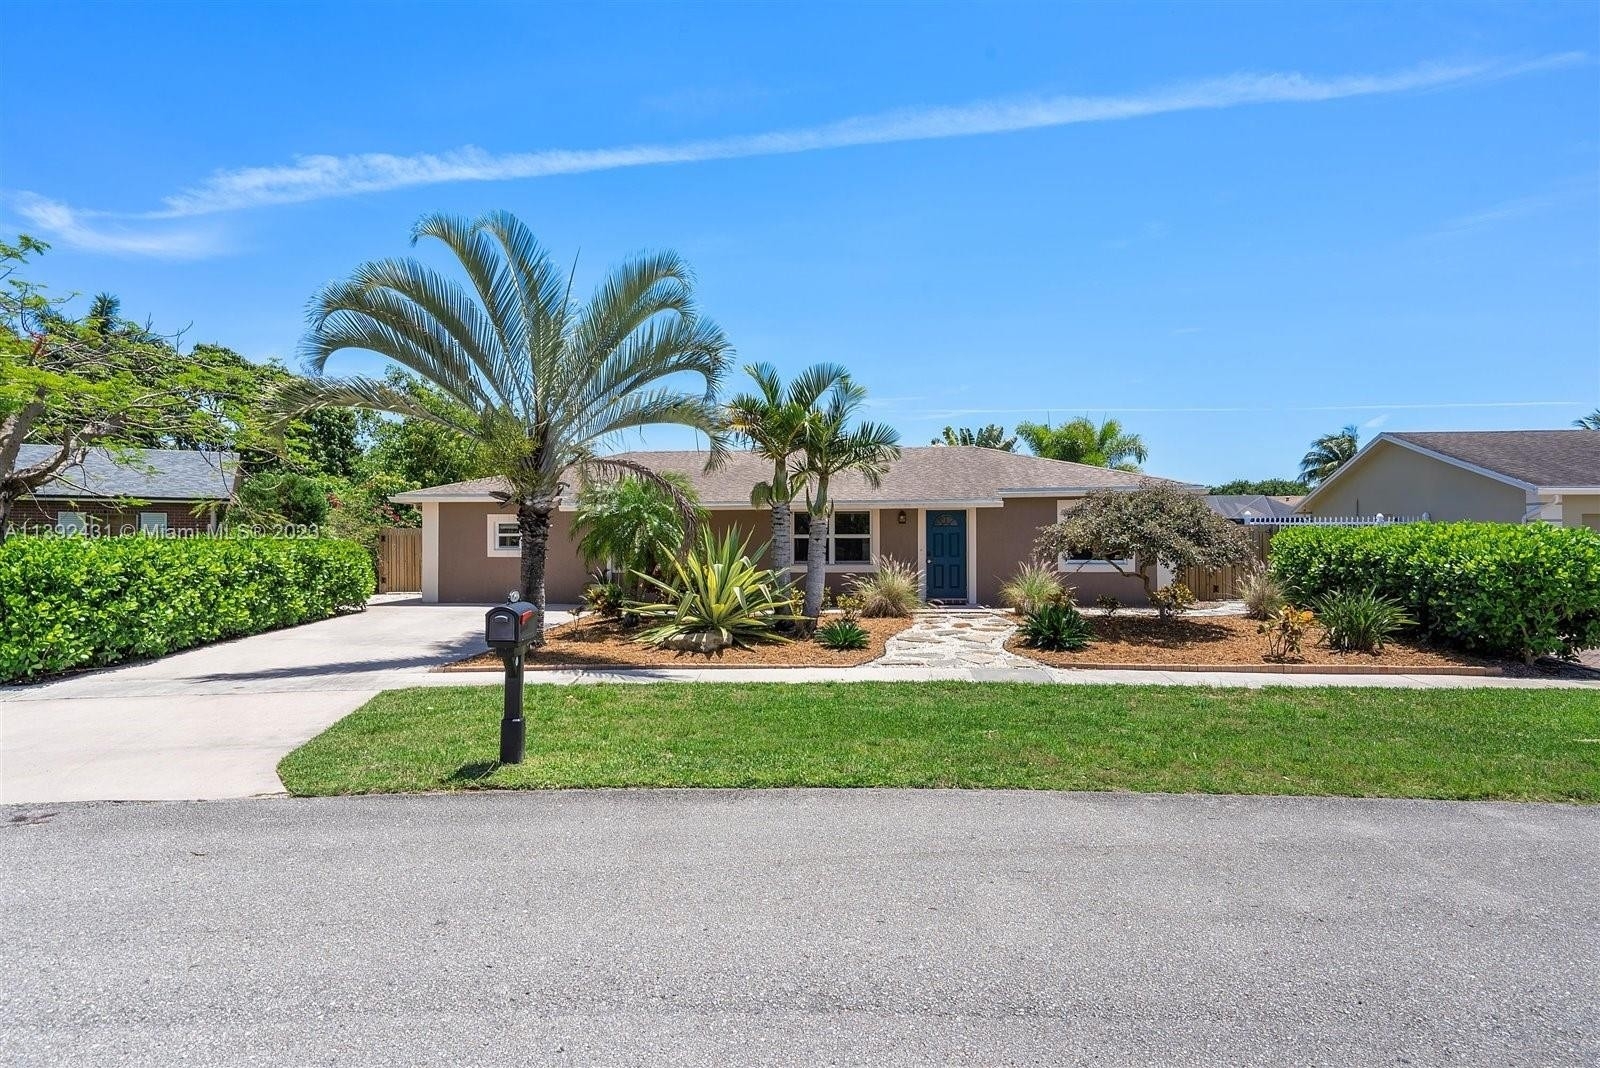 Single Family Home for Sale at American Homes Boca Raton, Boca Raton, FL 33434